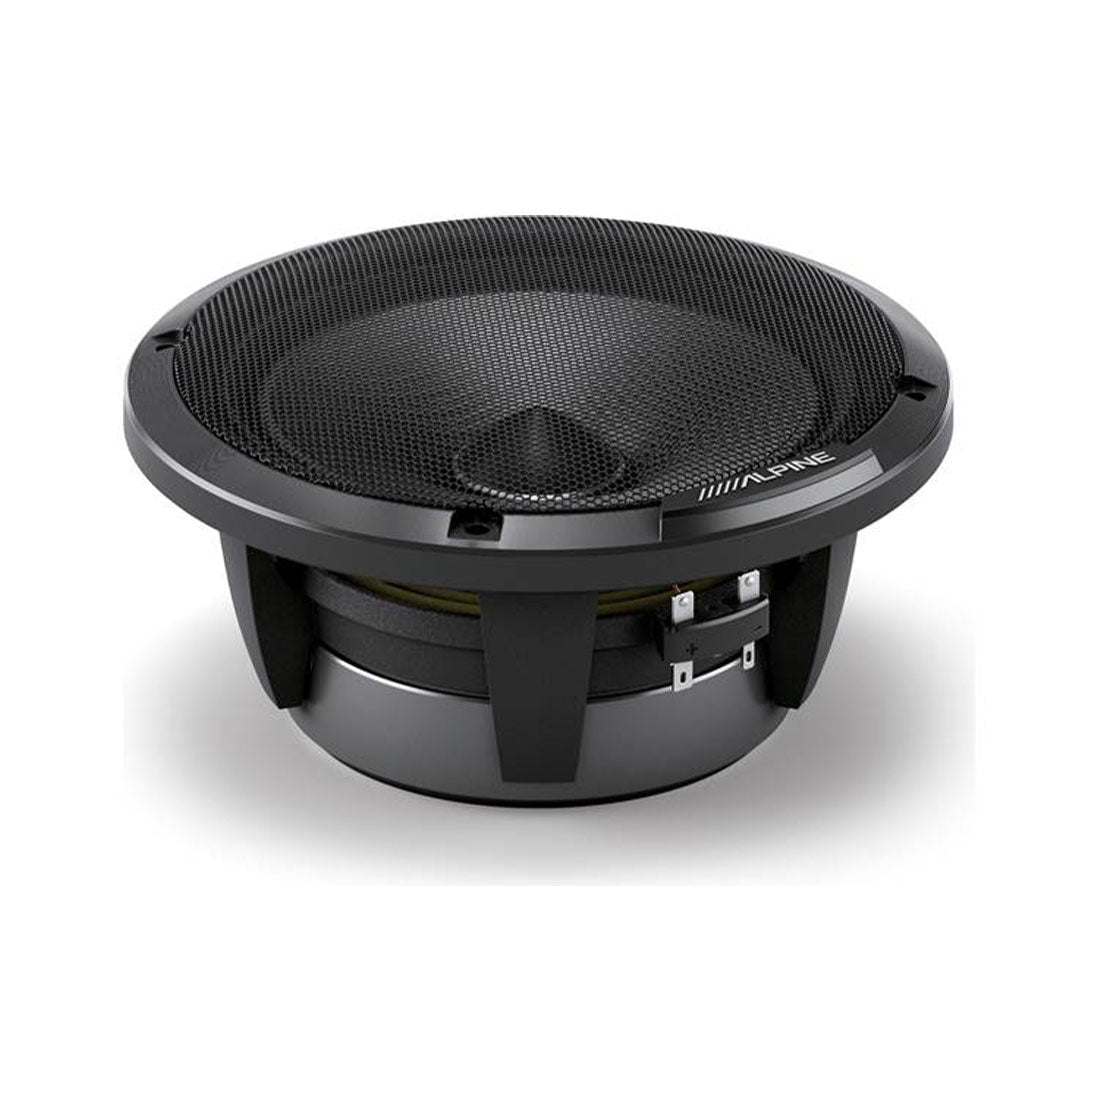 Alpine HDZ-65CS Status High-Resolution OEM-Fit 2-Way Component Speaker System